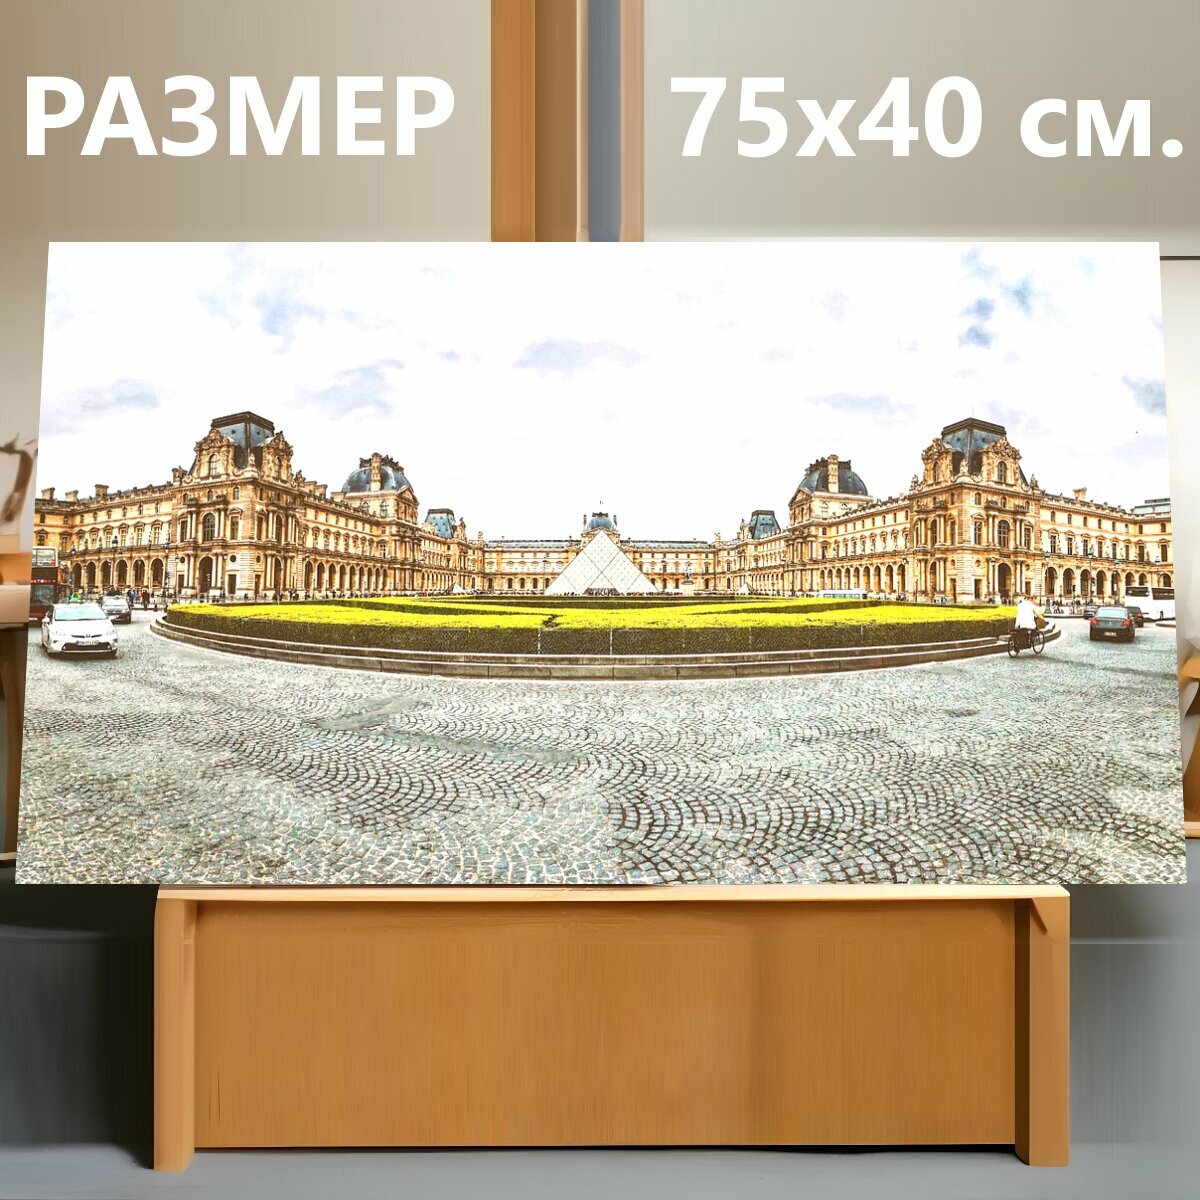 Картина на холсте "Франция, лувр, архитектура" на подрамнике 75х40 см. для интерьера